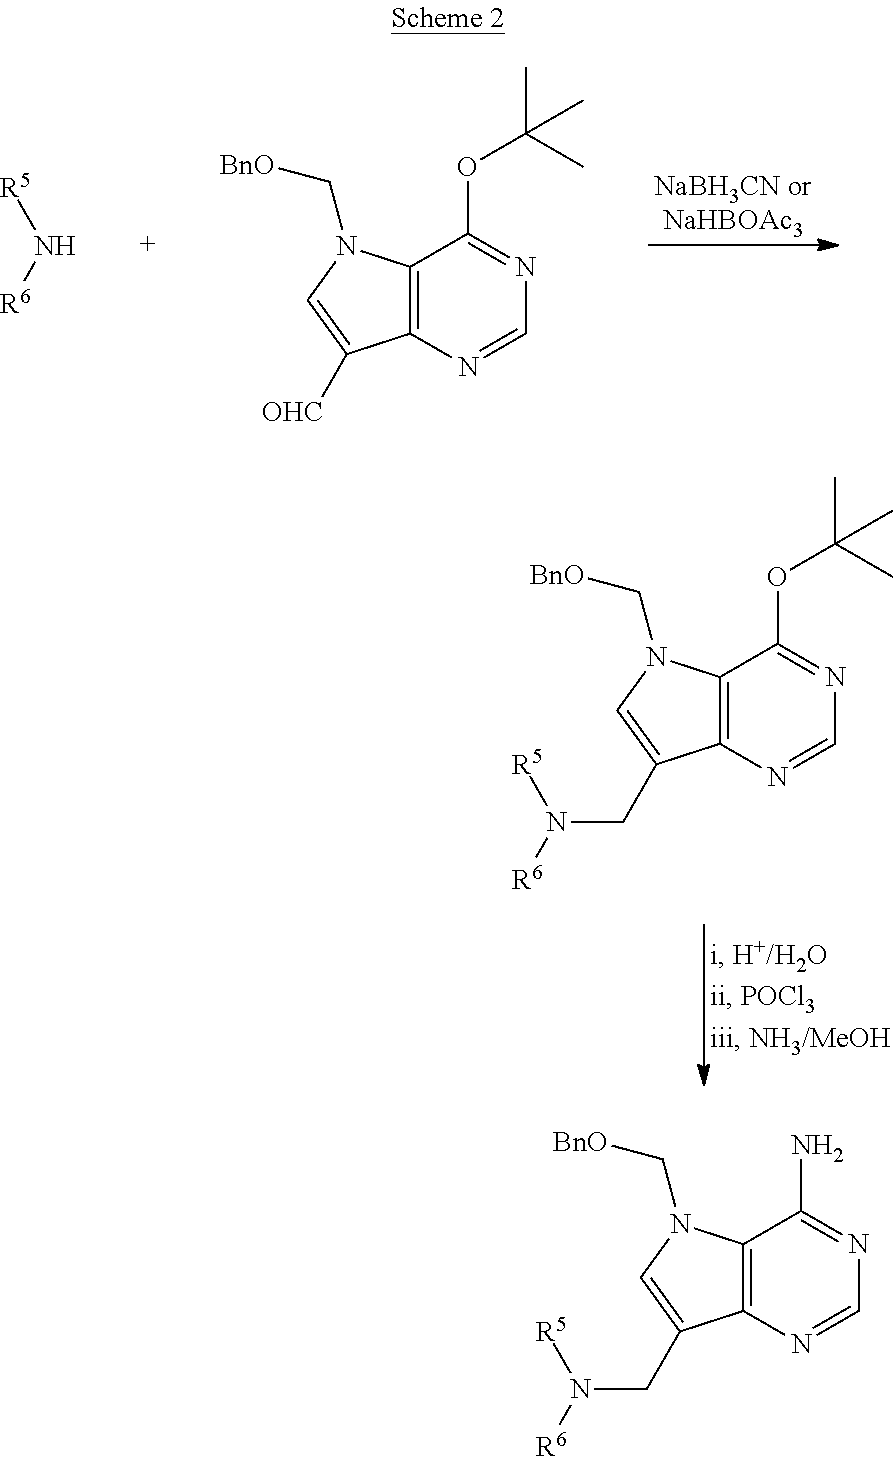 Acyclic amine inhibitors of 5-methytioadenosine phosphorylase and nucleosidase